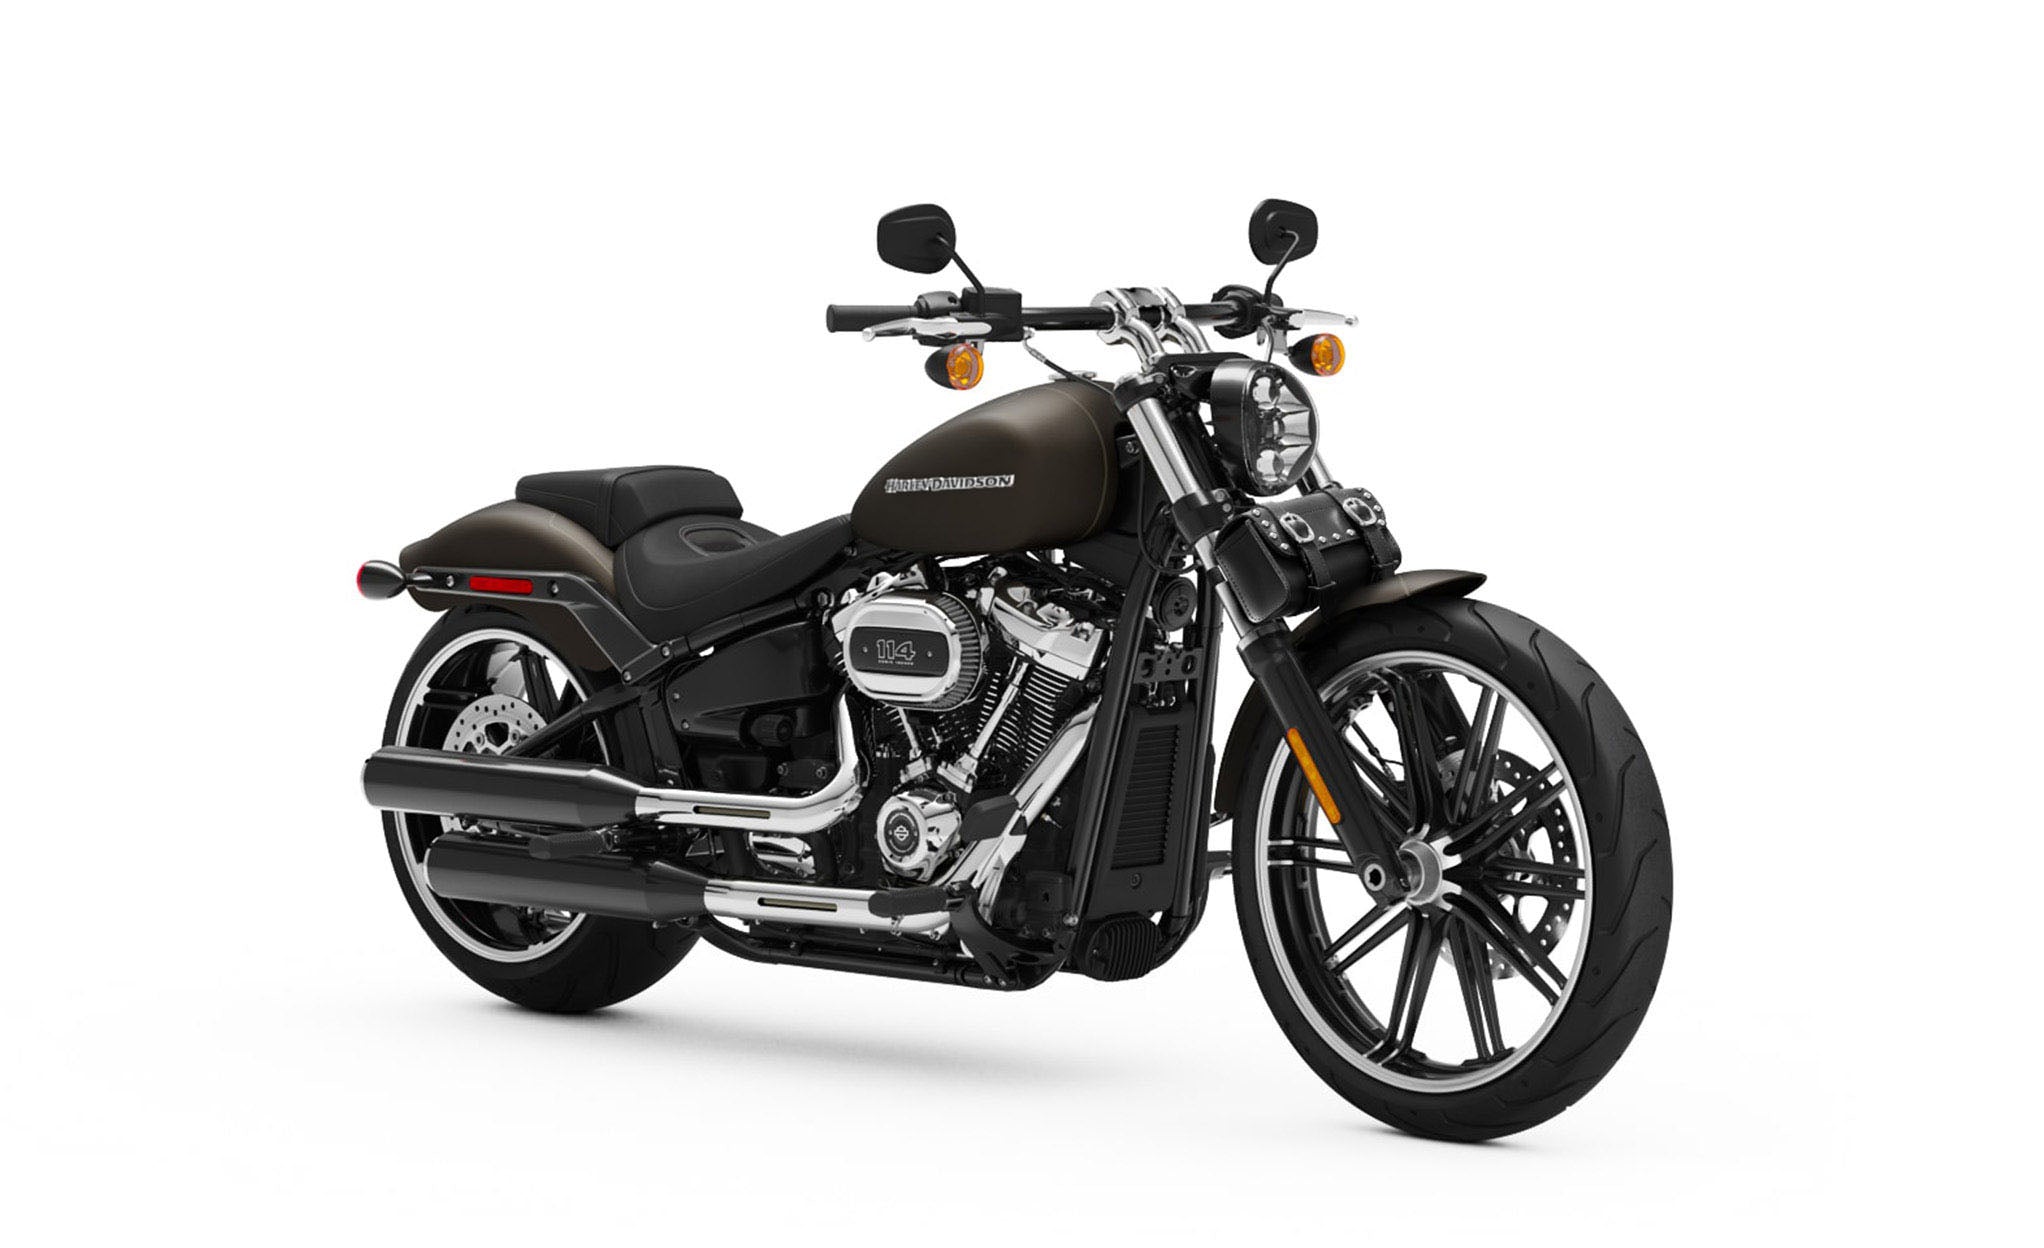 Viking Armor Studded Leather Motorcycle Handlebar Bag for Harley Davidson Bag on Bike View @expand